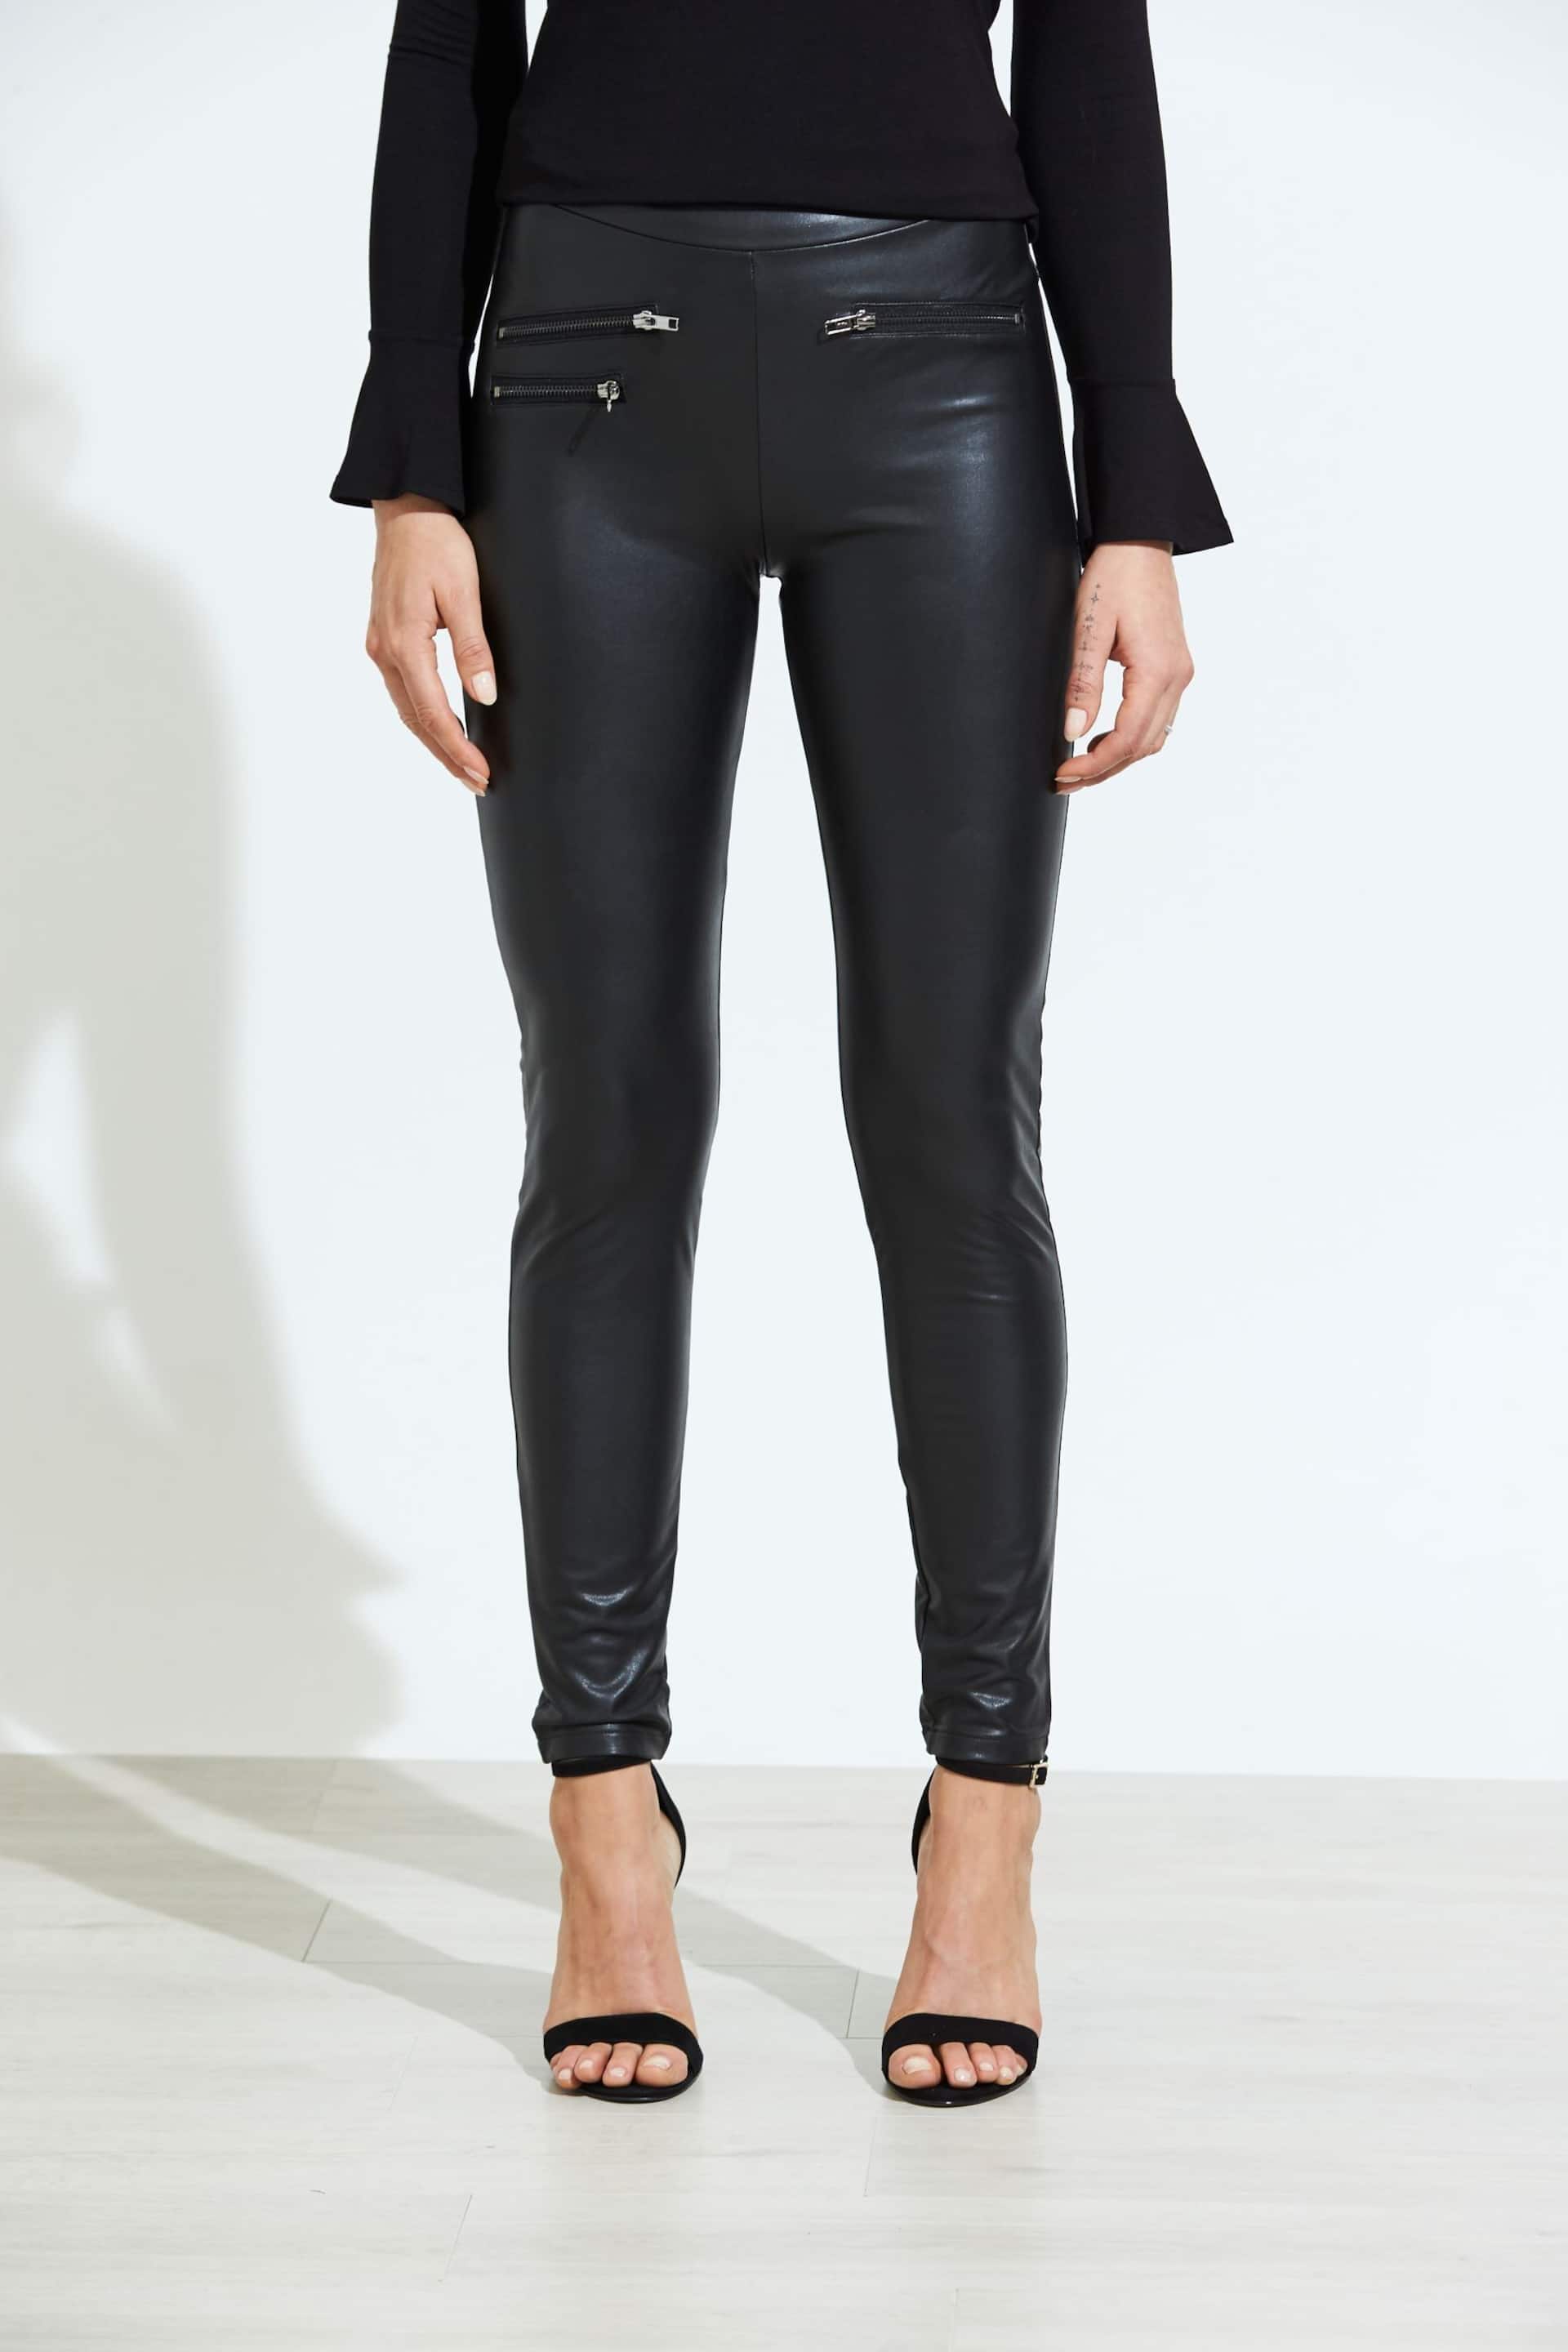 Sosandar Black Tall Leather Look Premium Leggings - Image 3 of 6